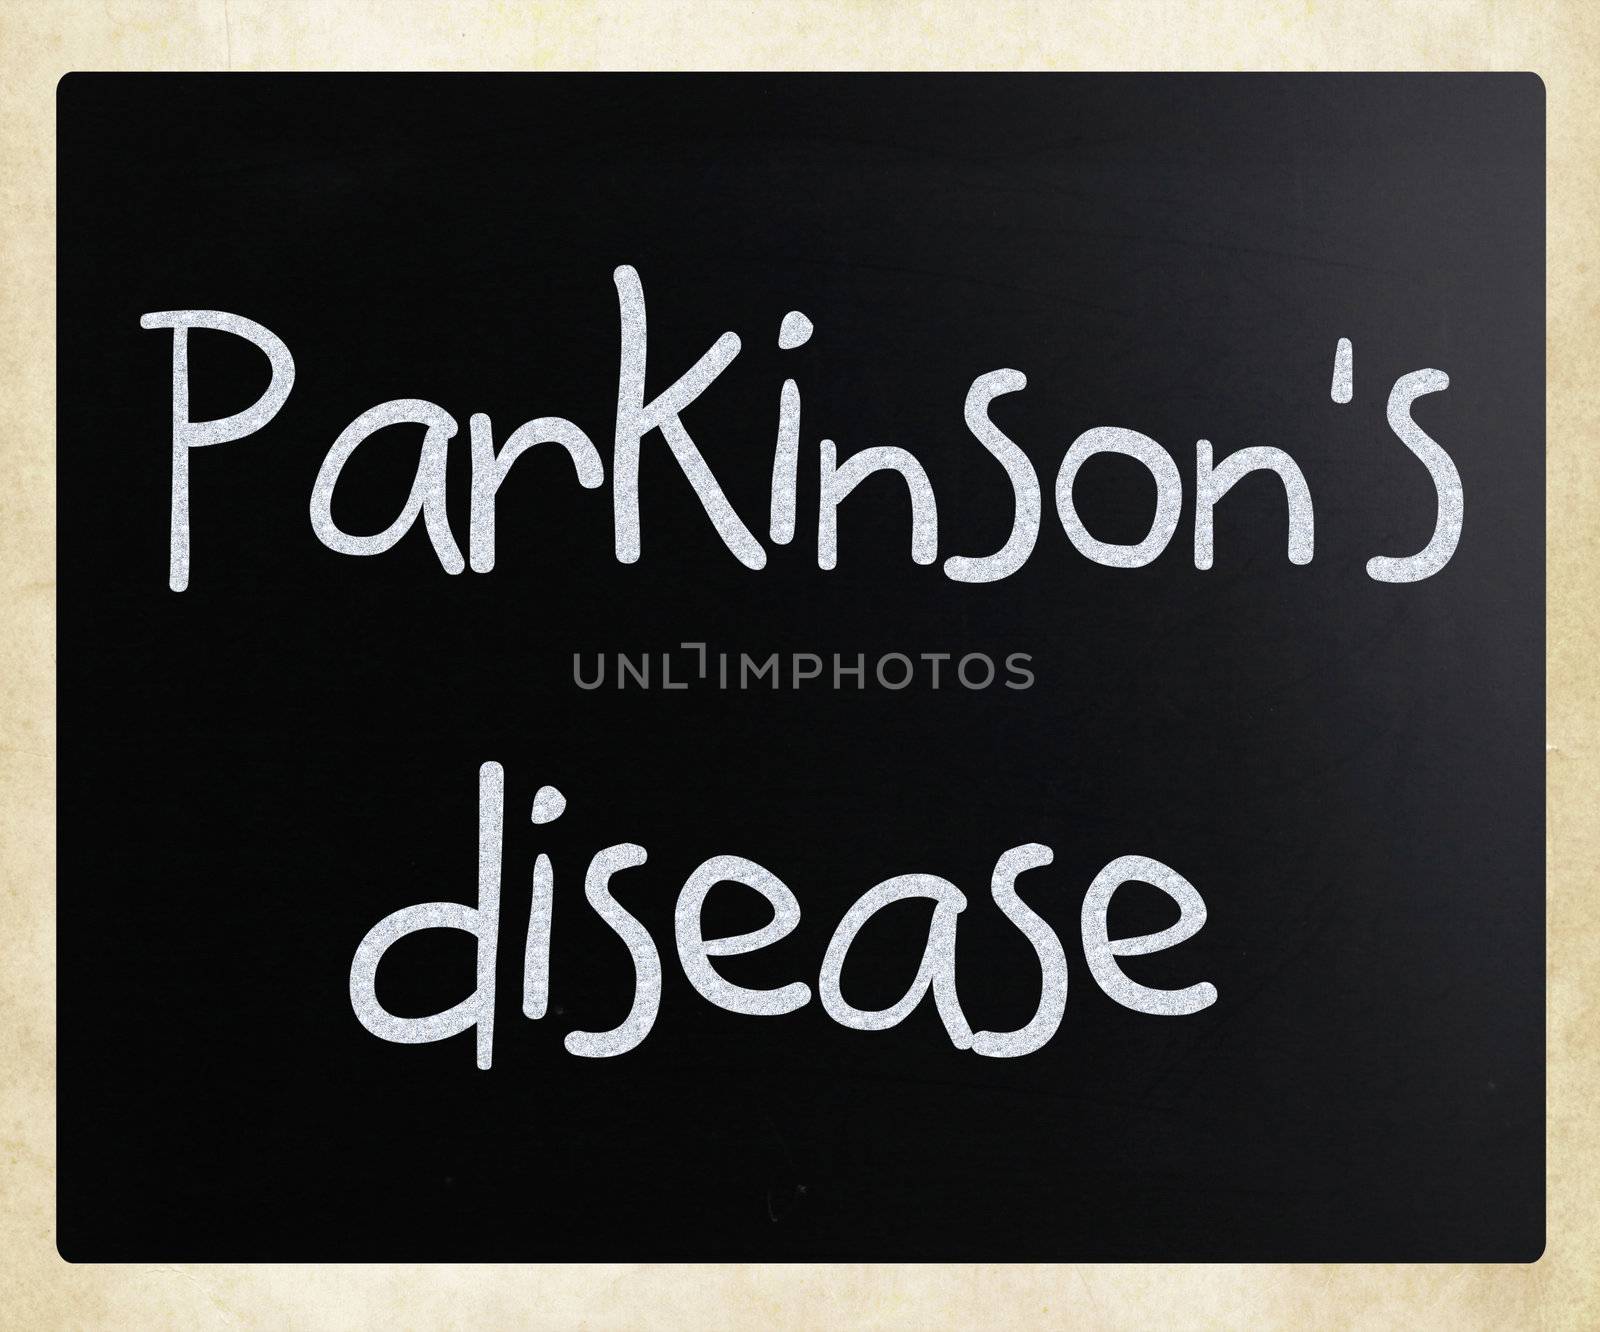 Parkinson's disease by nenov